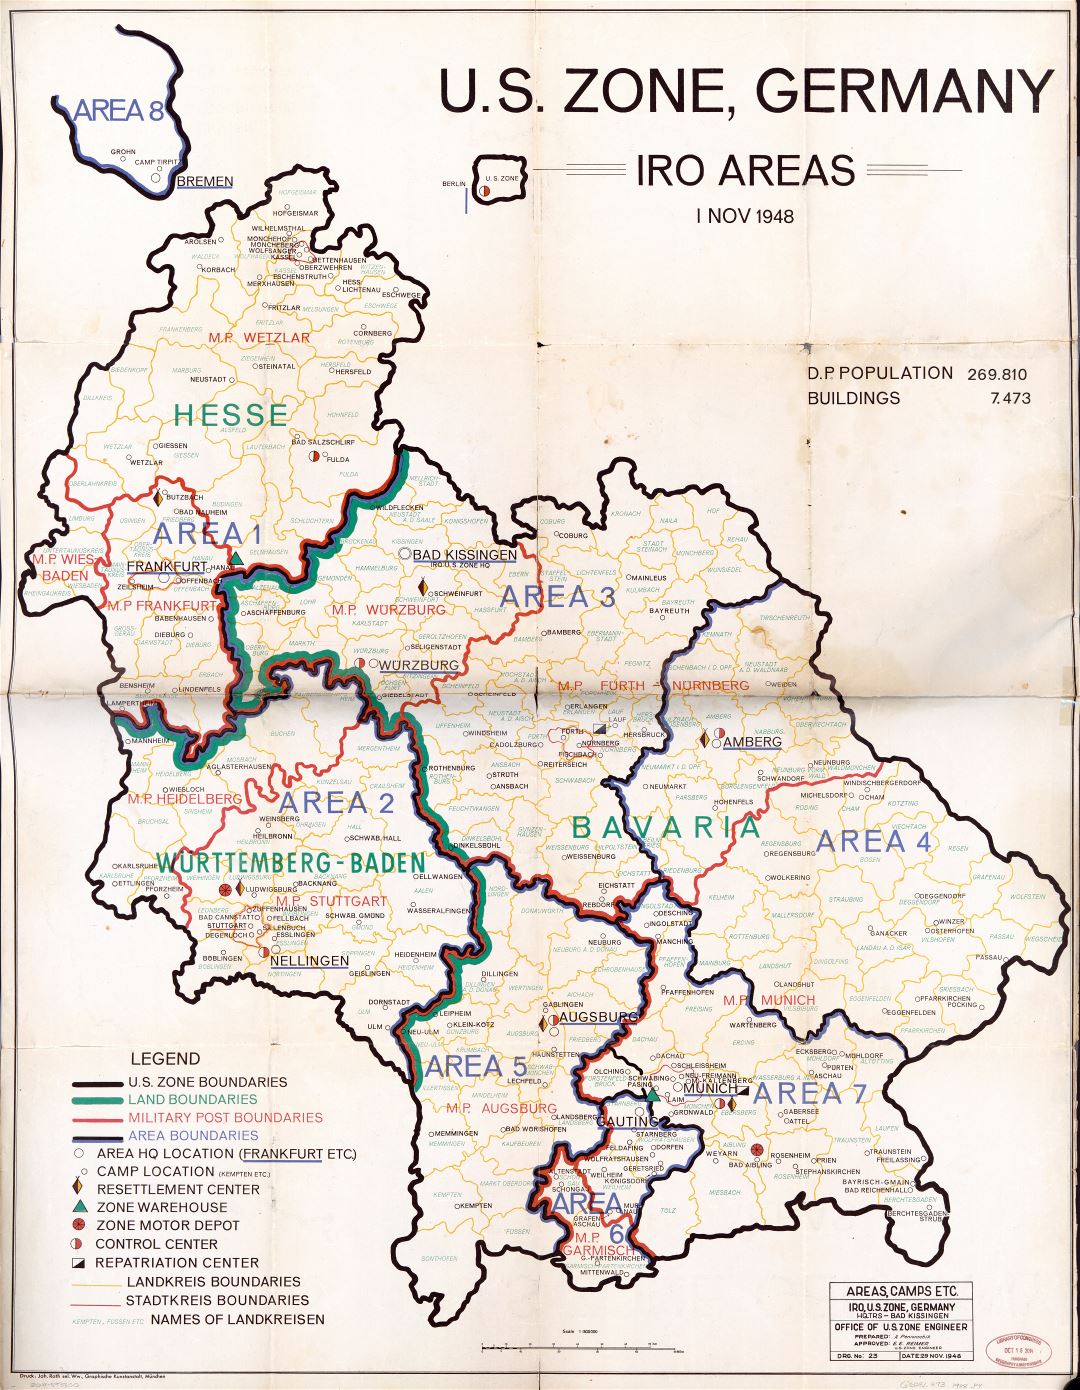 Large scale detailed U.S. zone, Germany IRO areas map - 1 November 1948